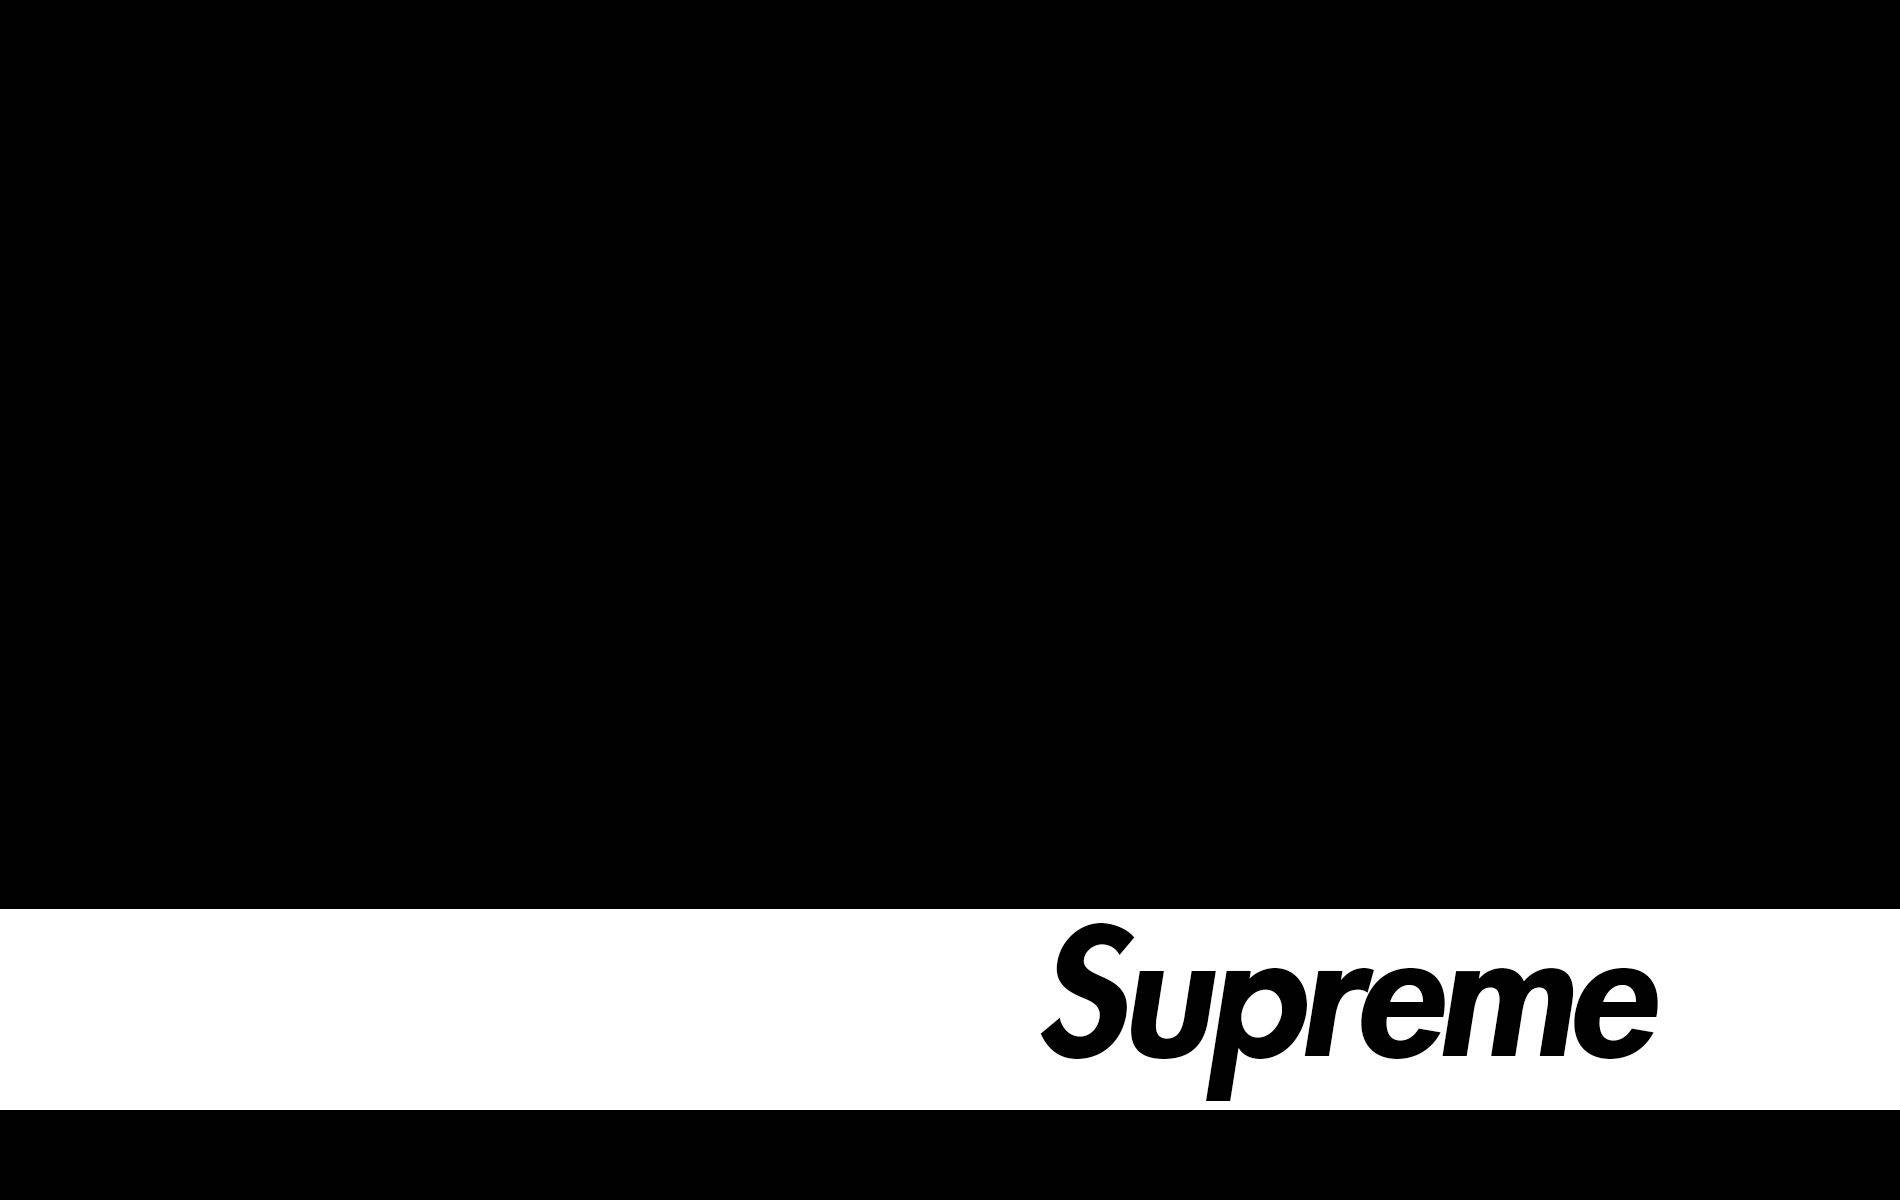 Black Supreme With White Horizontal Border Background